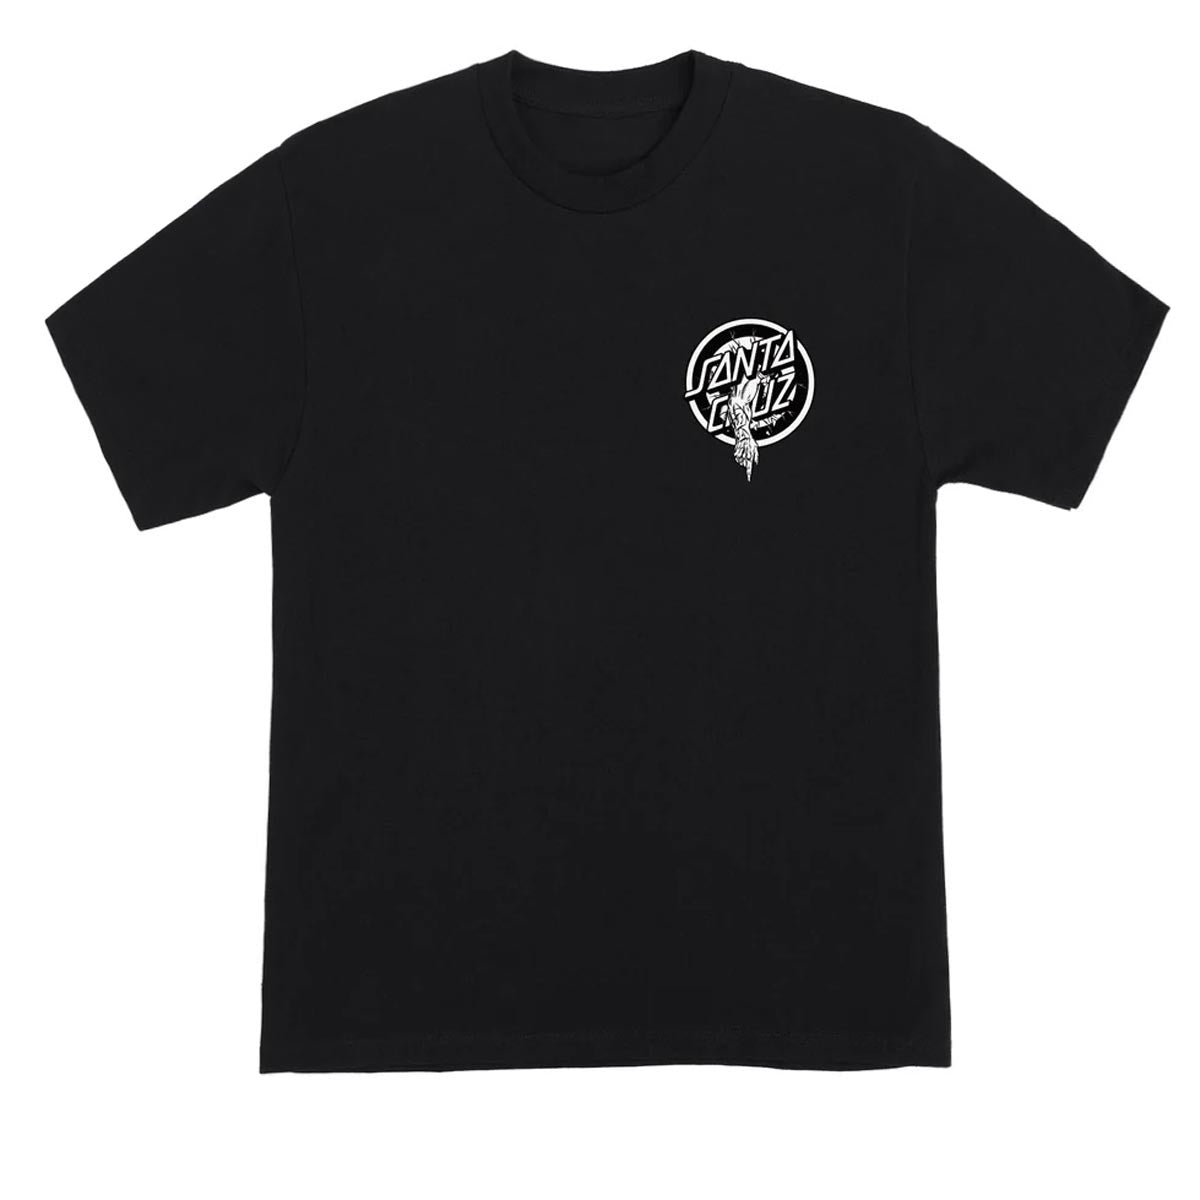 Santa Cruz Roskopp Evo 2 T-Shirt - Black image 2